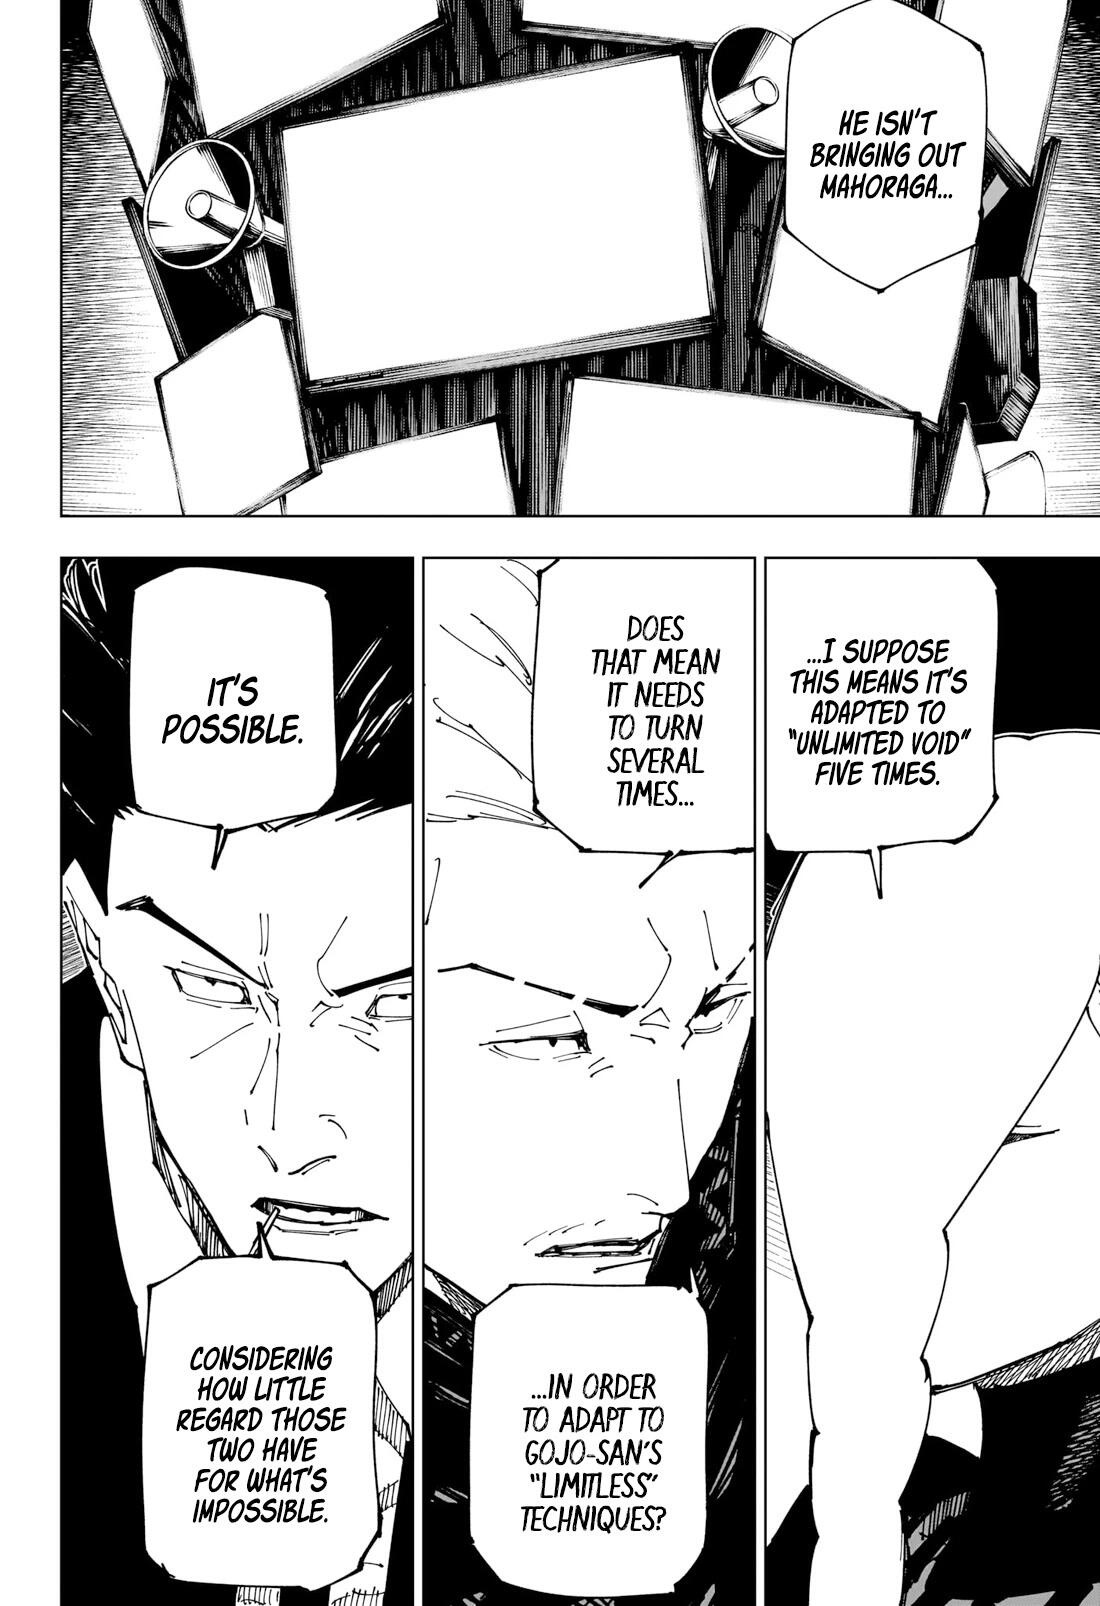 Jujutsu Kaisen Chapter 231: The Decisive Battle In The Uninhabited, Demon-Infested Shinjuku ⑨ page 16 - Mangakakalot